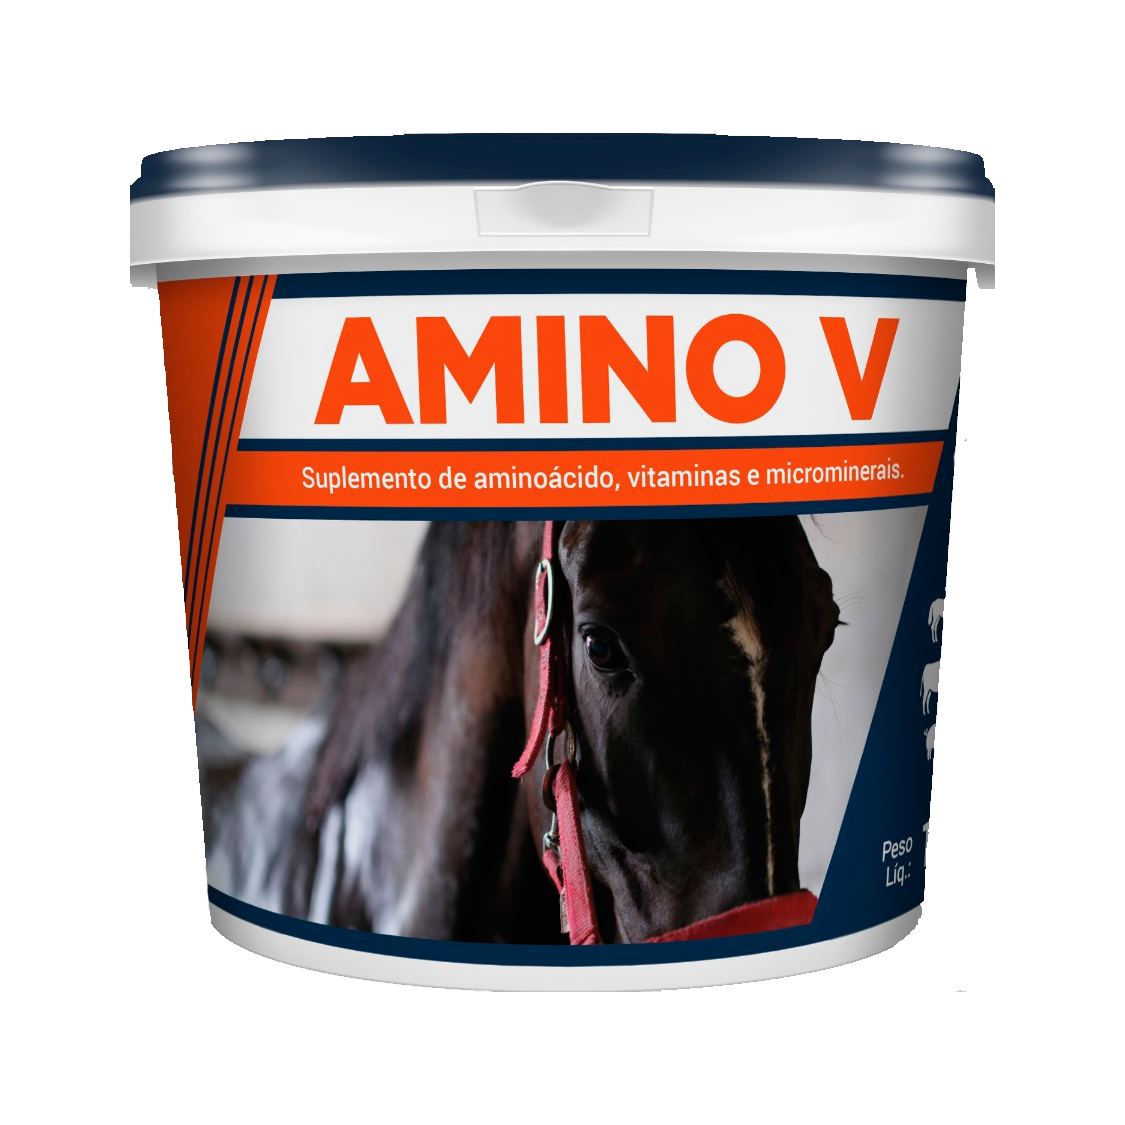 AMINO V - Complemento Nutricional Aminoácido Vitamínico e Mineral 